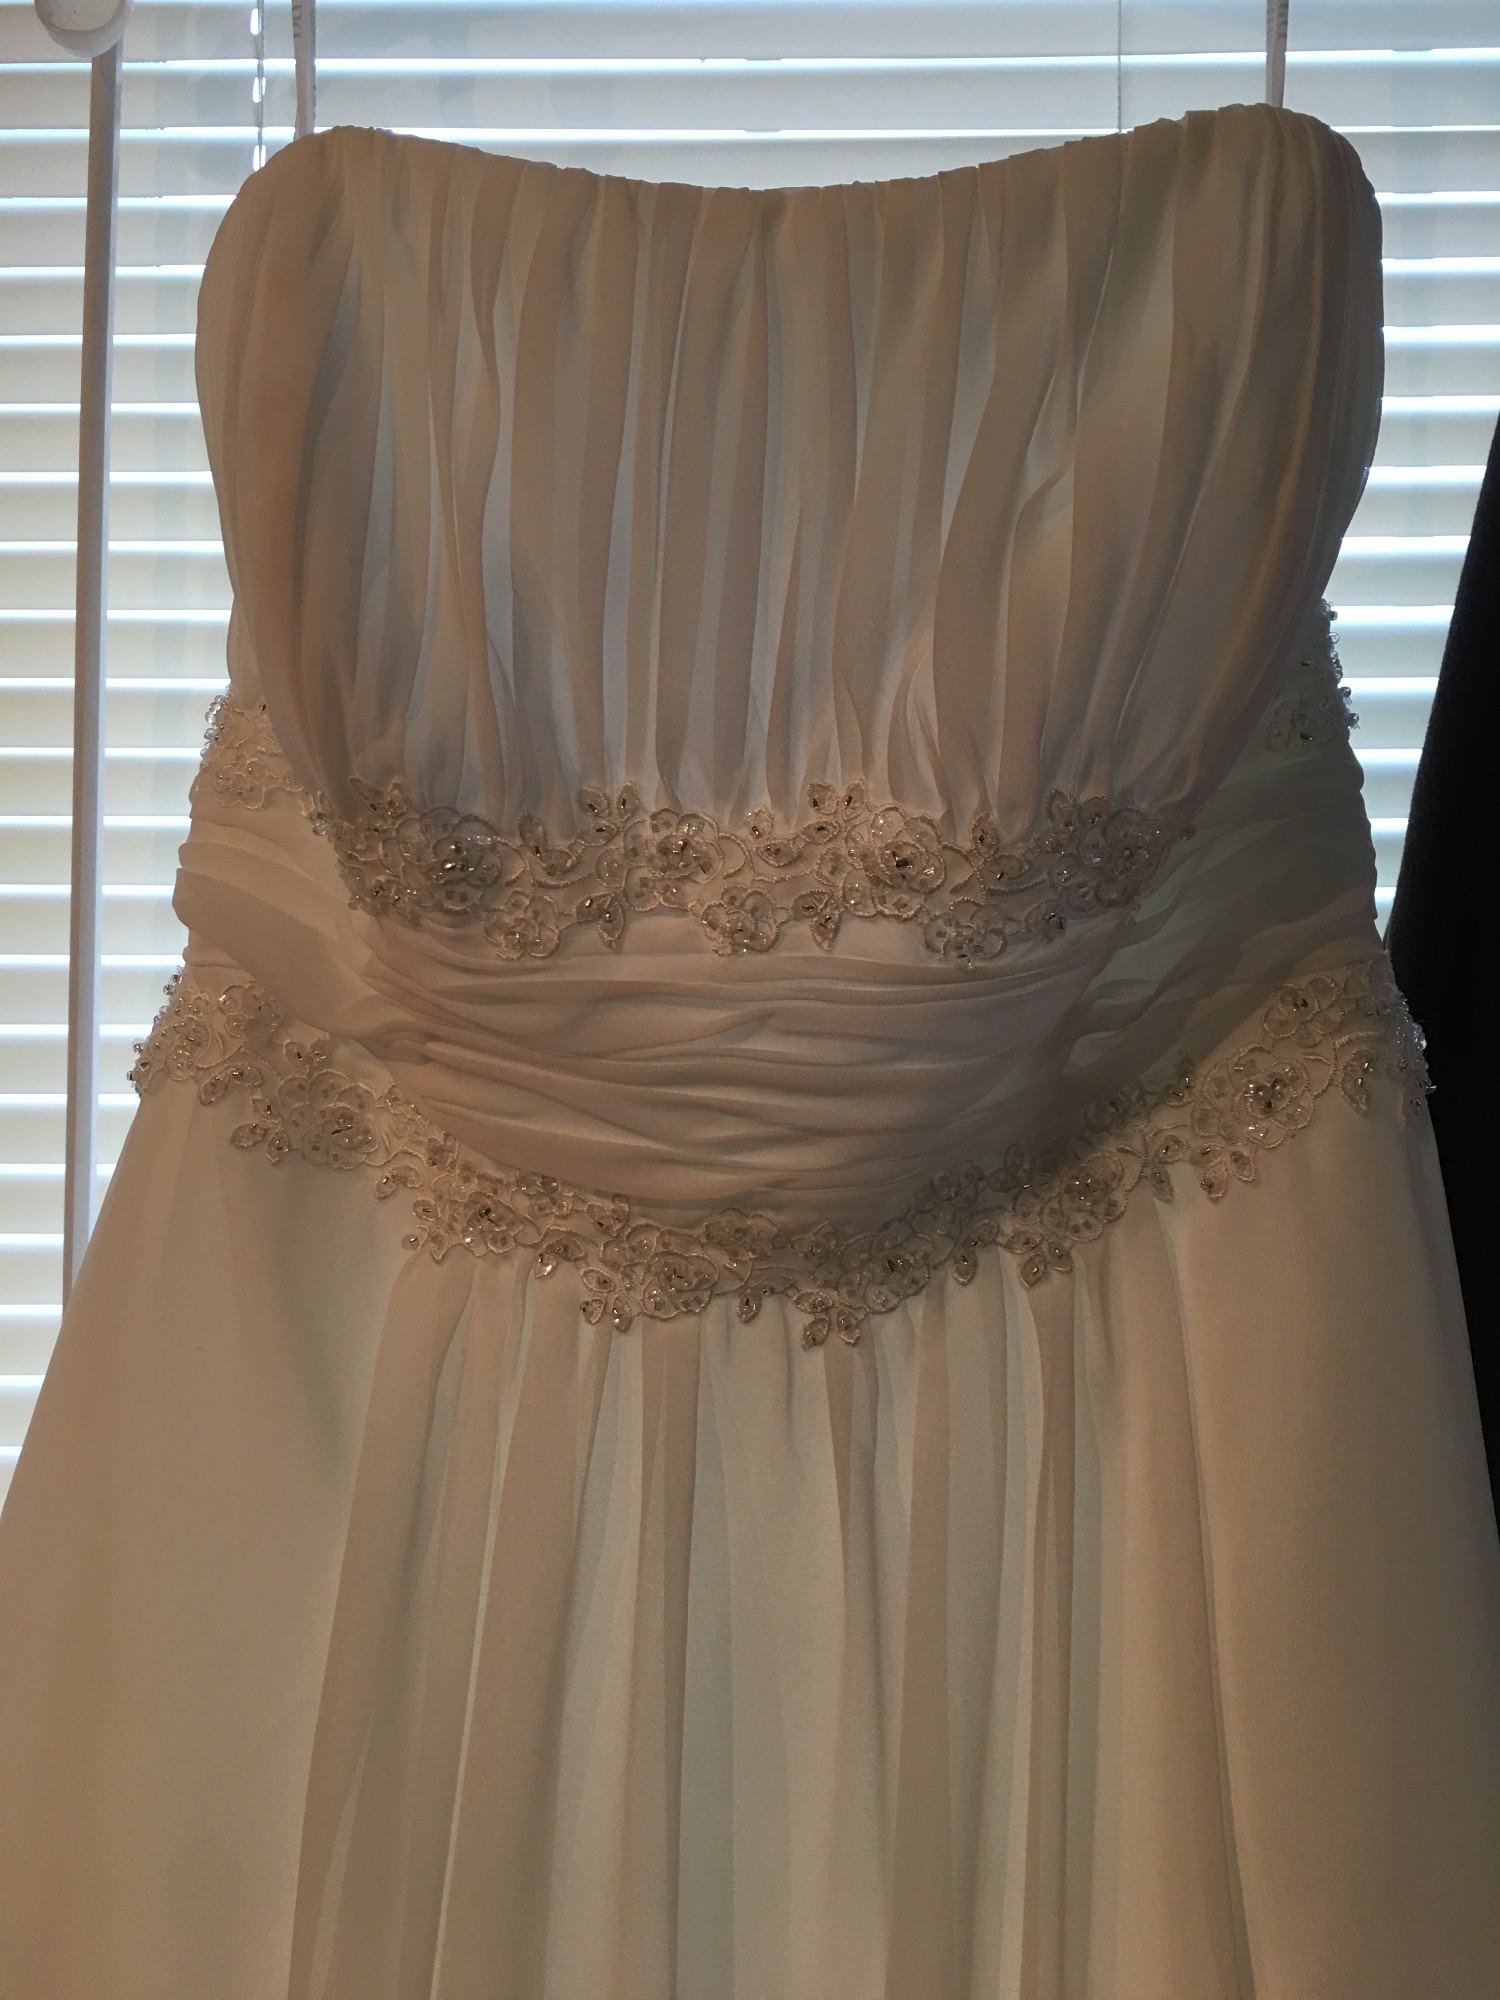 David's Bridal Soft Chiffon Wedding Dress with Beaded Lace Detail Used  Wedding Dress Save 71% - Stillwhite